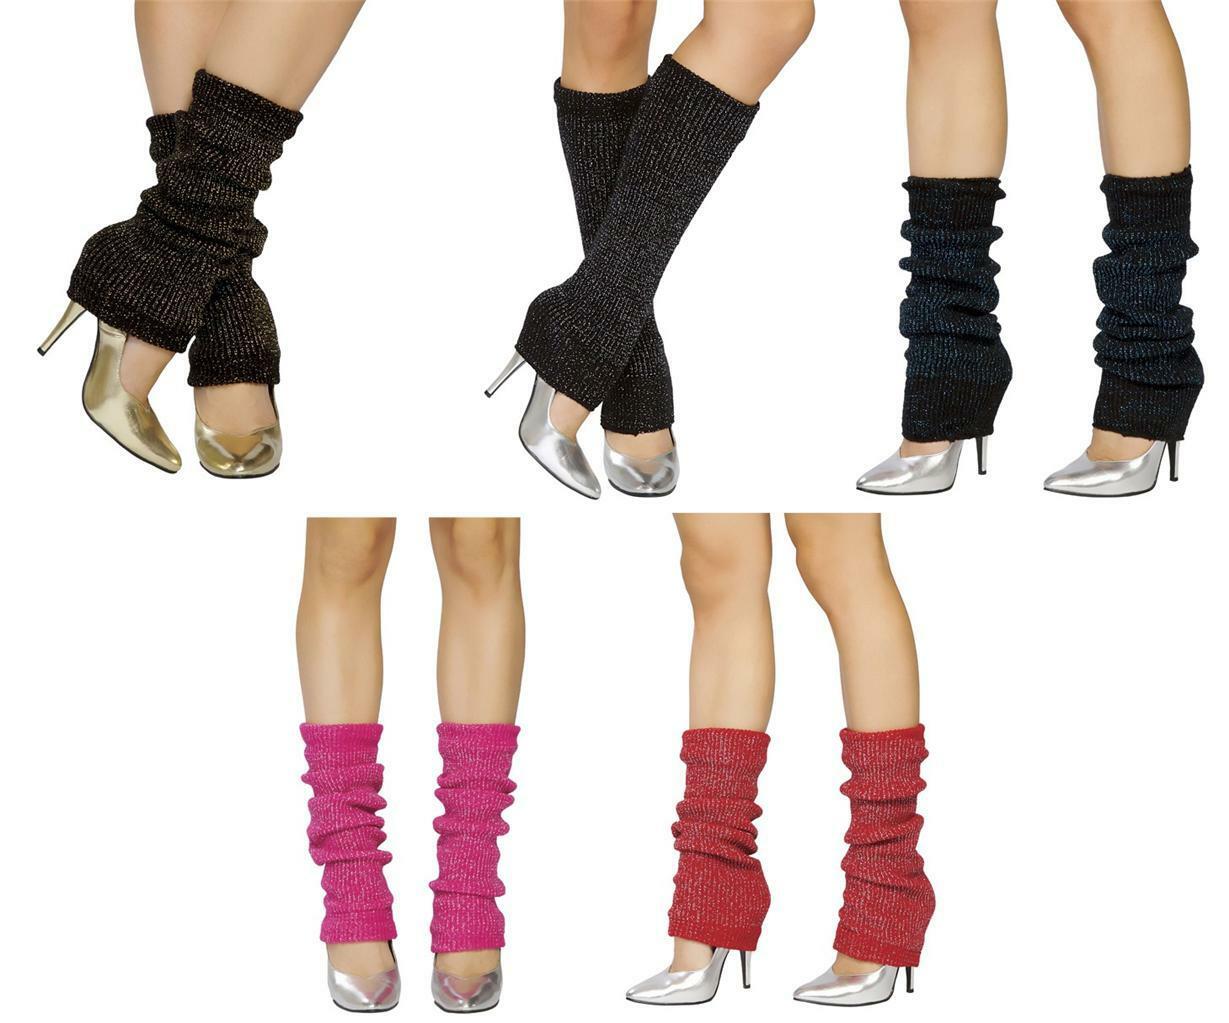 Sparkle Leg Warmers Metallic Knee High Knit Retro Dance 80s Costume Lw102